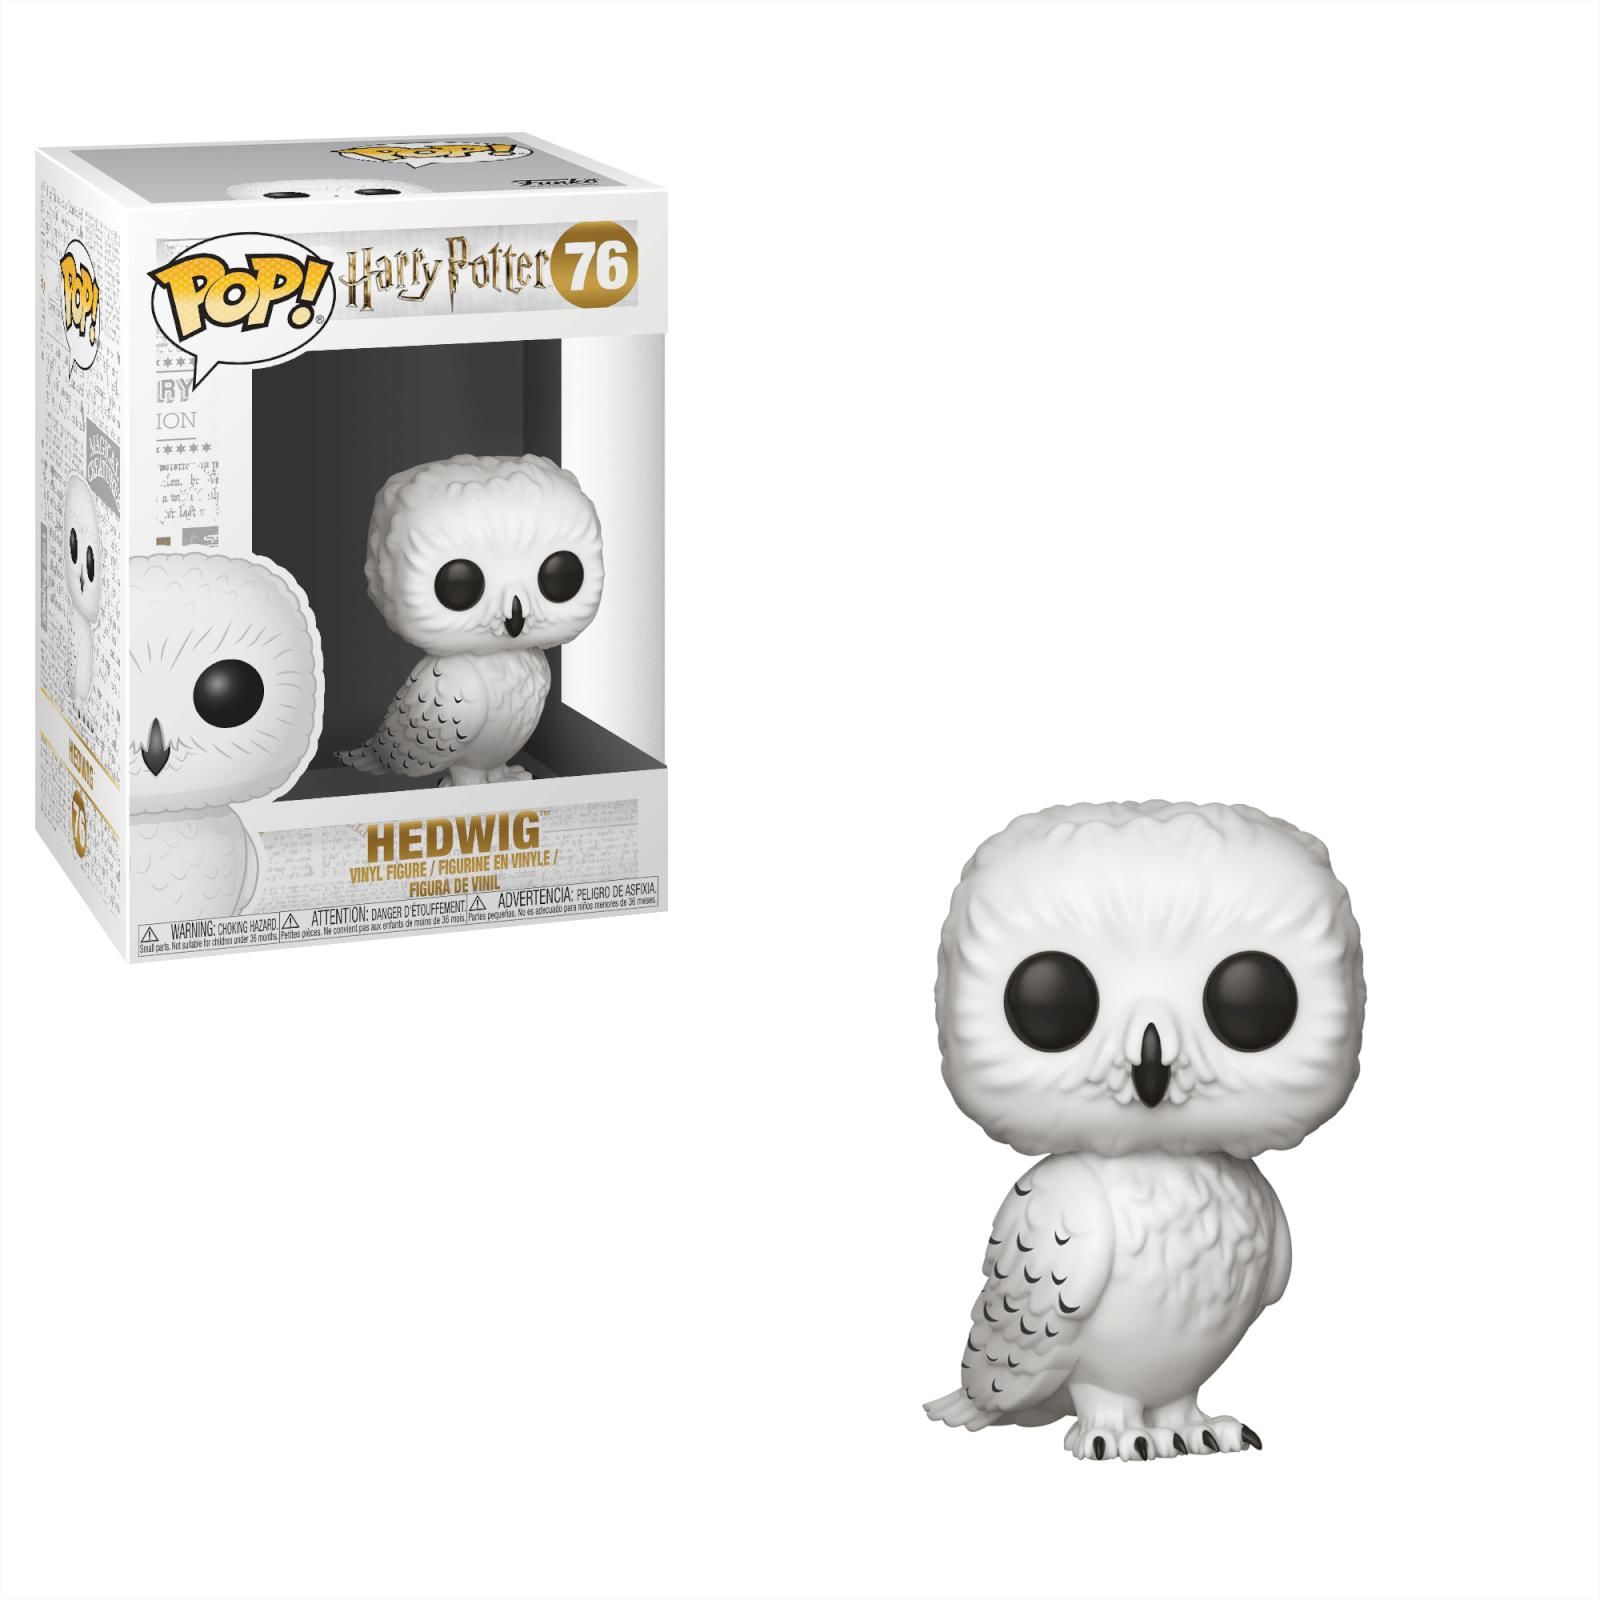 Acheter Funko Pop! Harry Potter Hedwig - Figurines prix promo neuf et  occasion pas cher